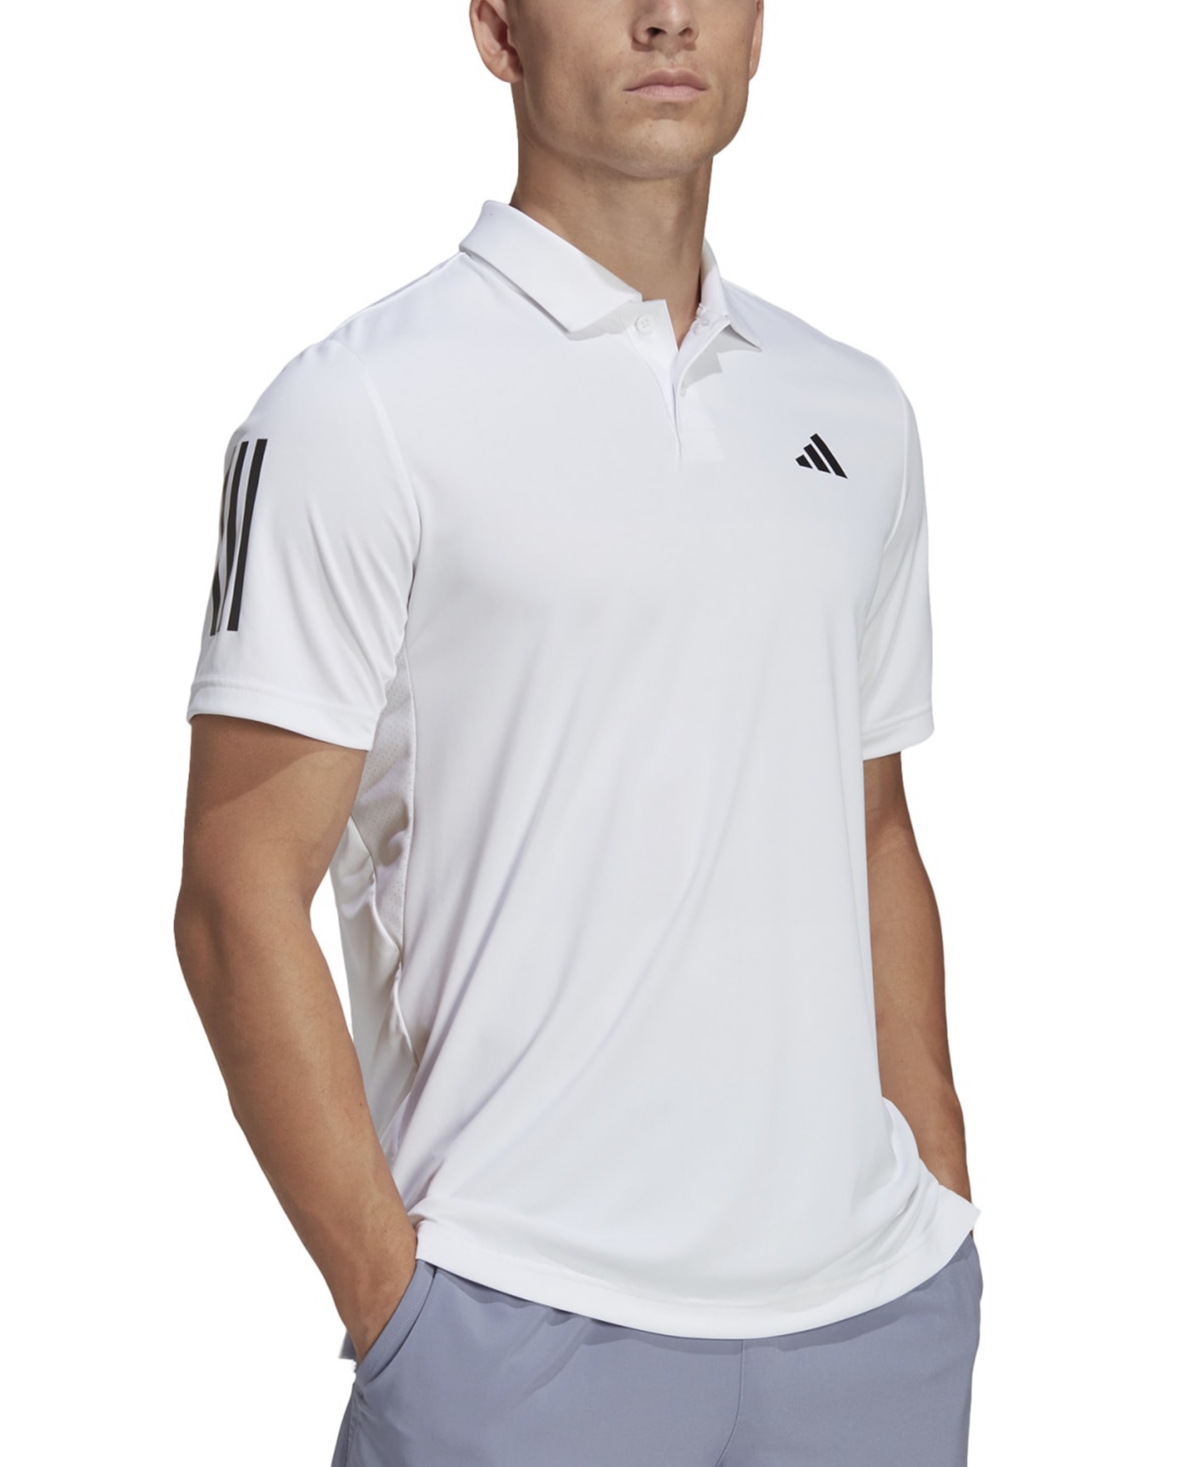 Adidas Originals Men's 3-stripes Short Sleeve Performance Club Tennis Polo Shirt In Halo Blue